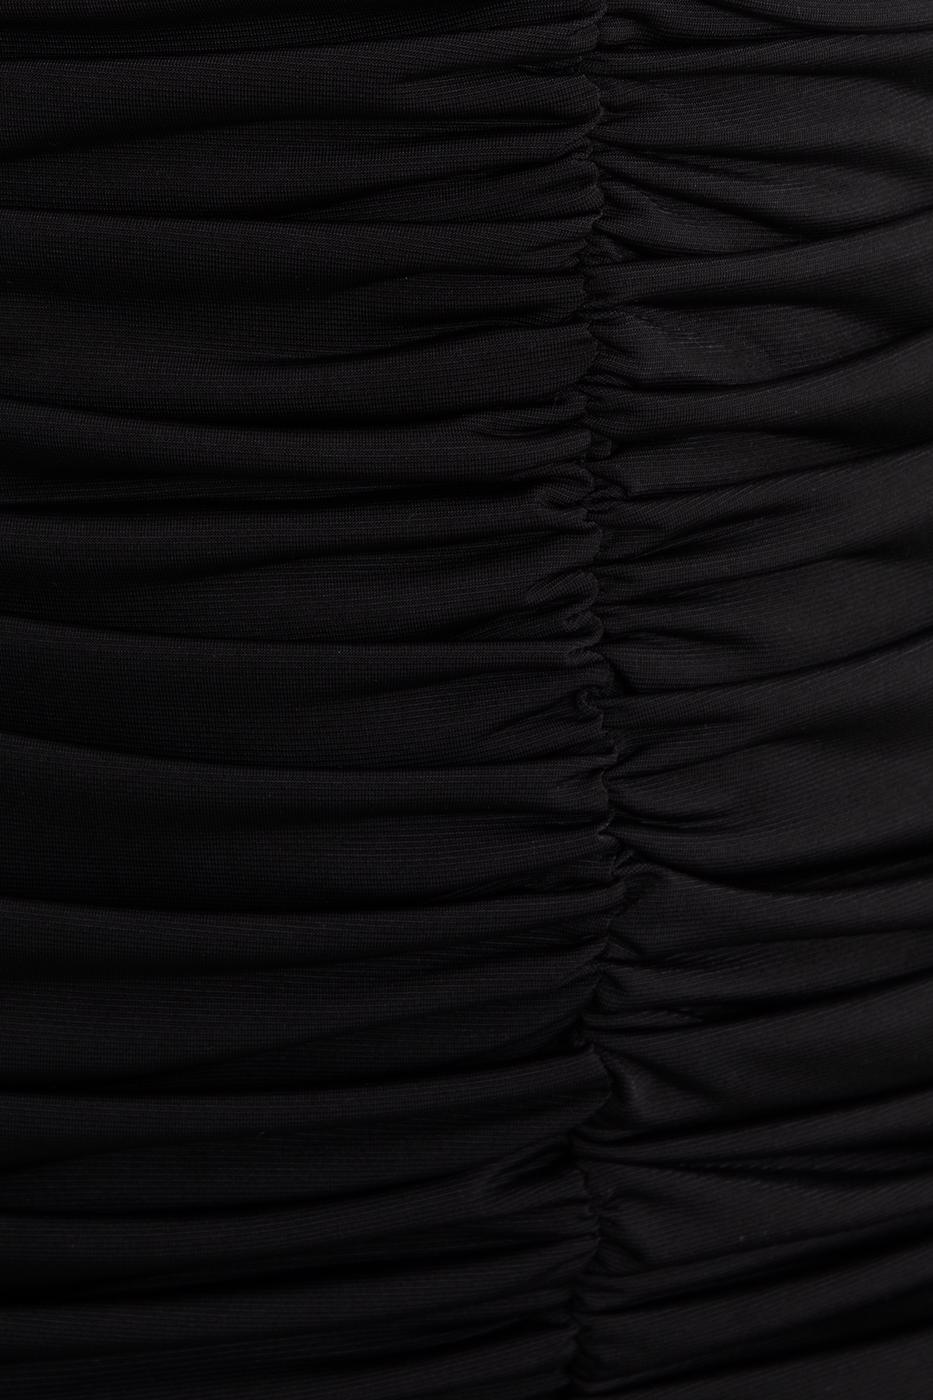 Bayan Siyah Derin V Yakalı Drapeli Mini Elbise